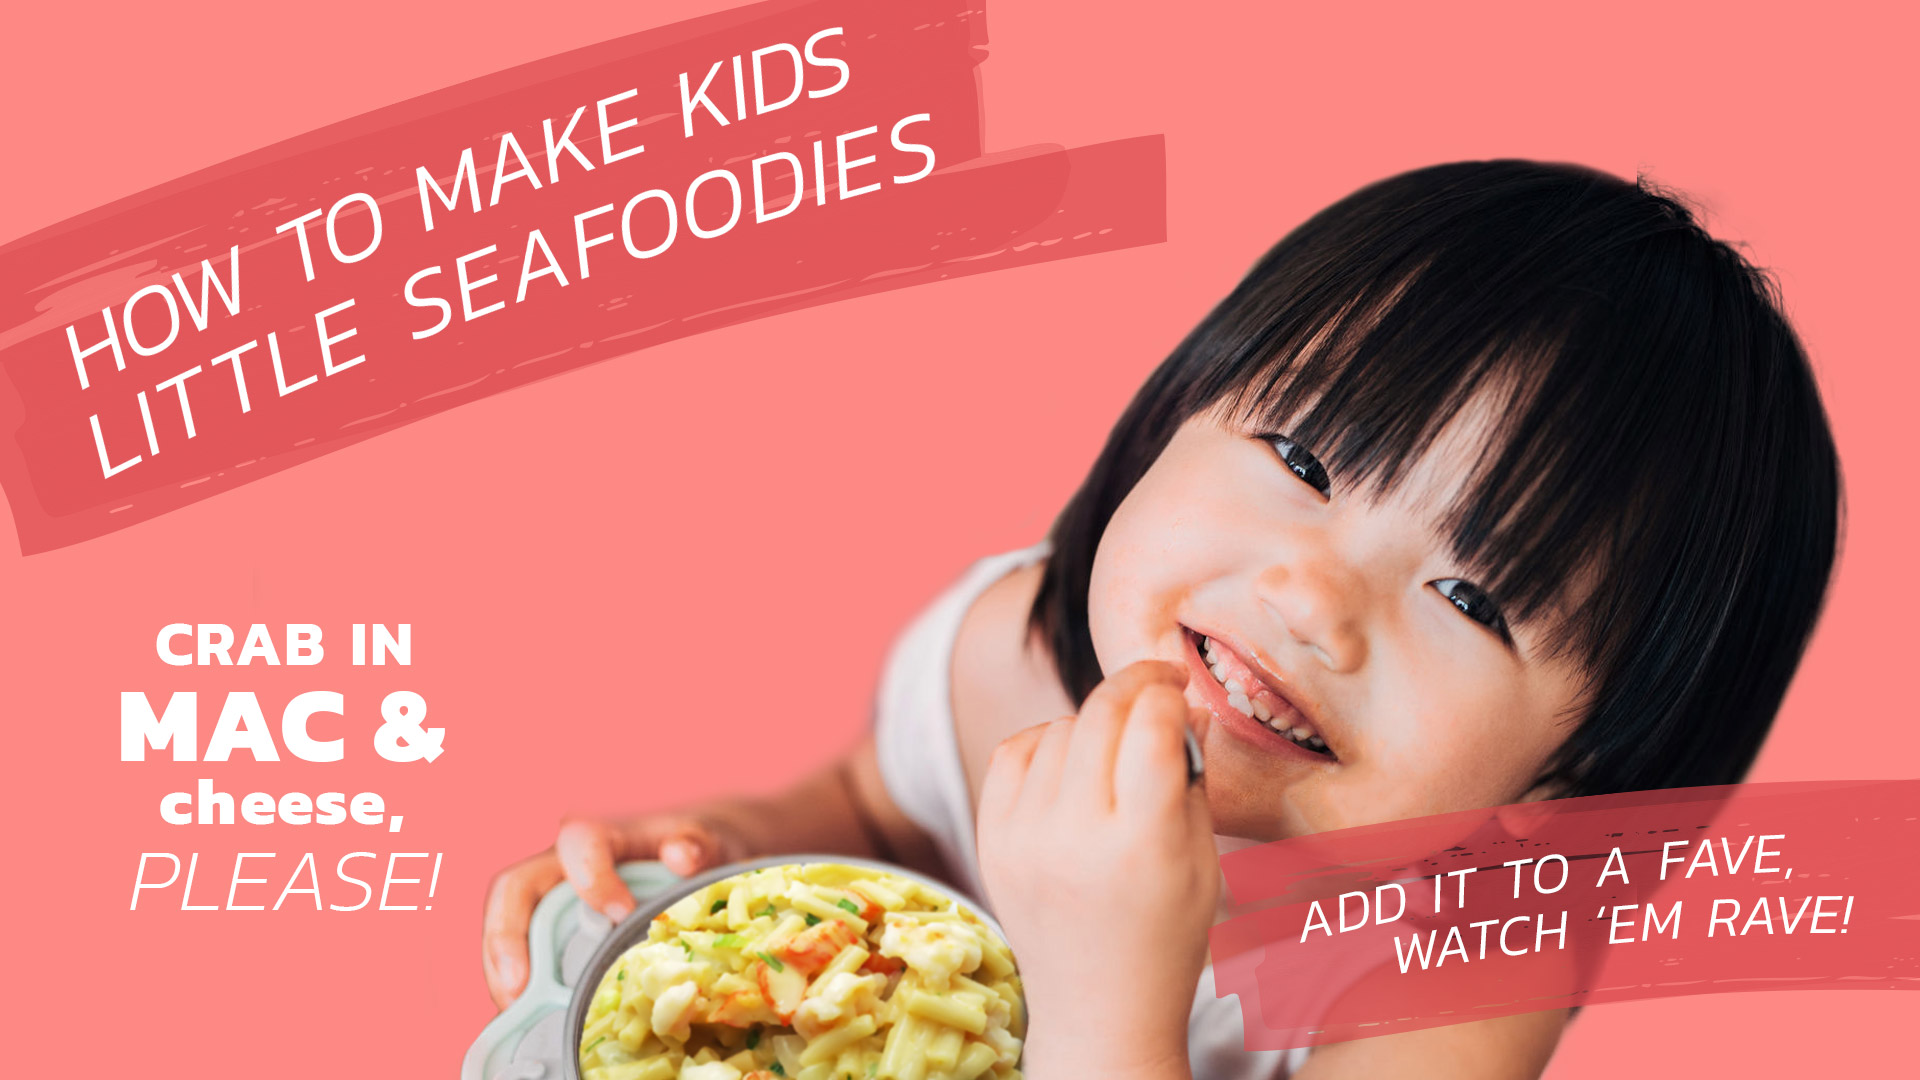 Little Seafoodies • Seafood Nutrition Partnership 5624